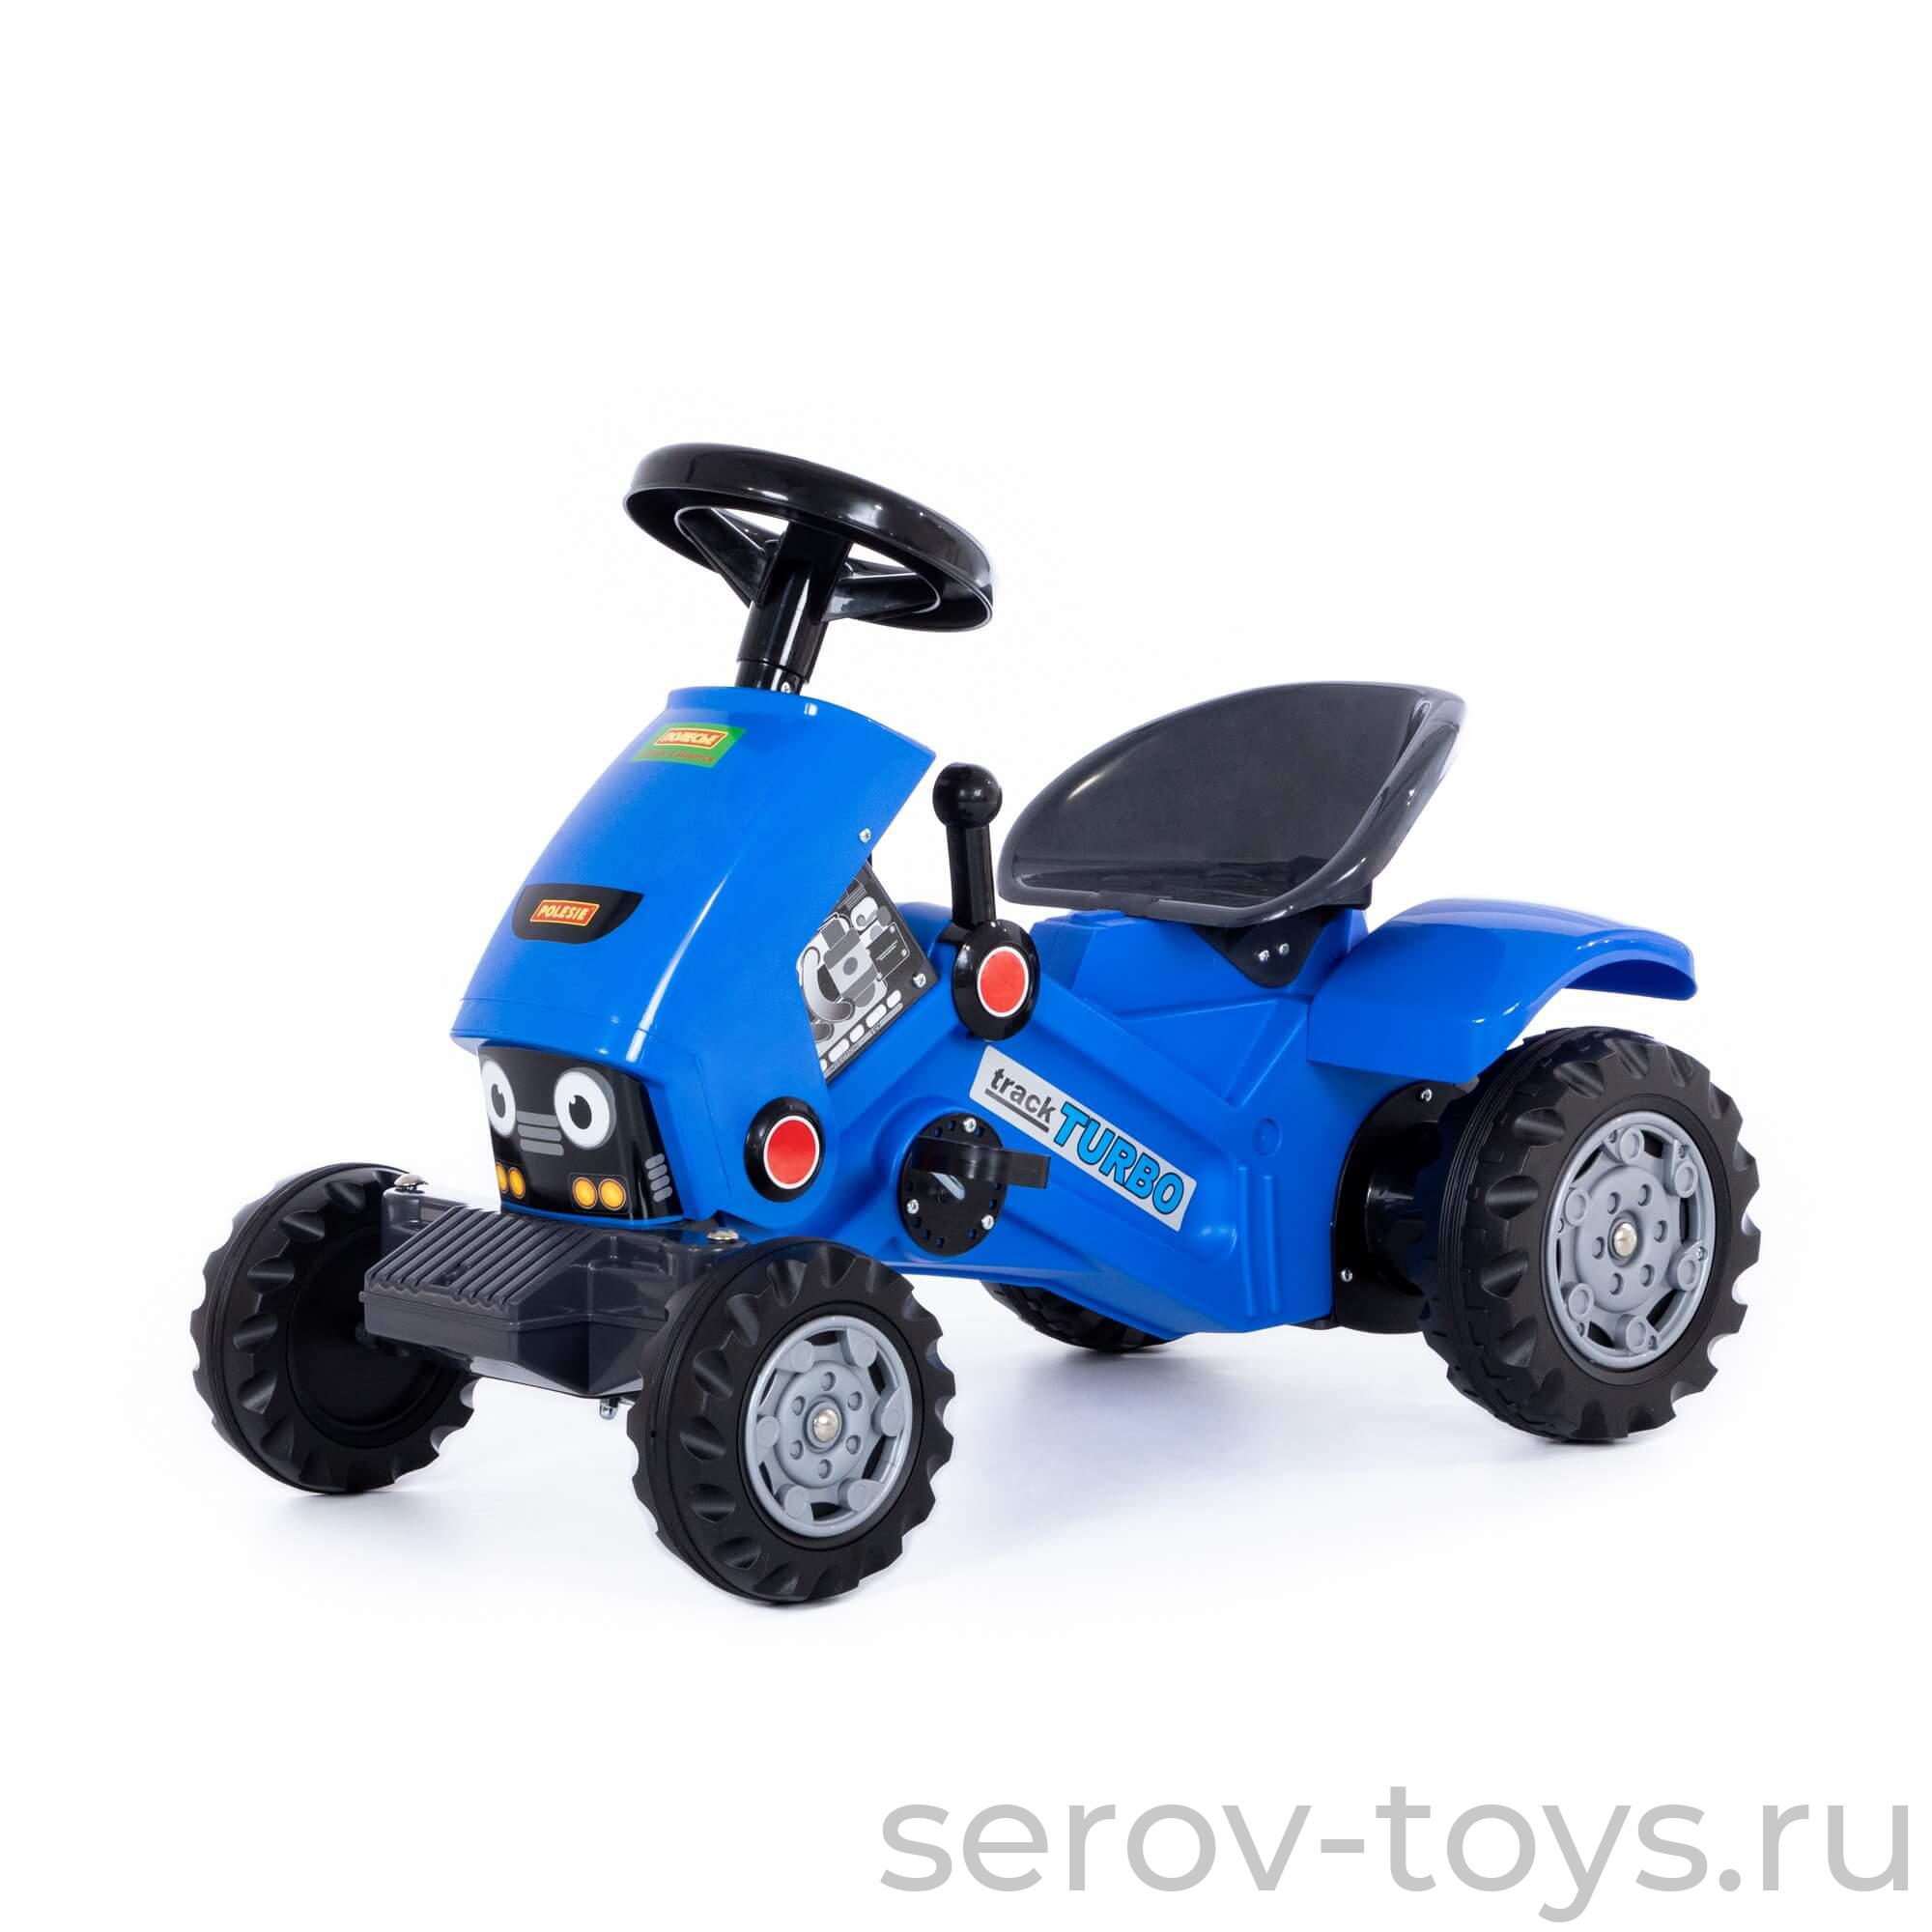 Каталка - трактор с педалями Турбо - 2 84644 до 50 кг Синяя